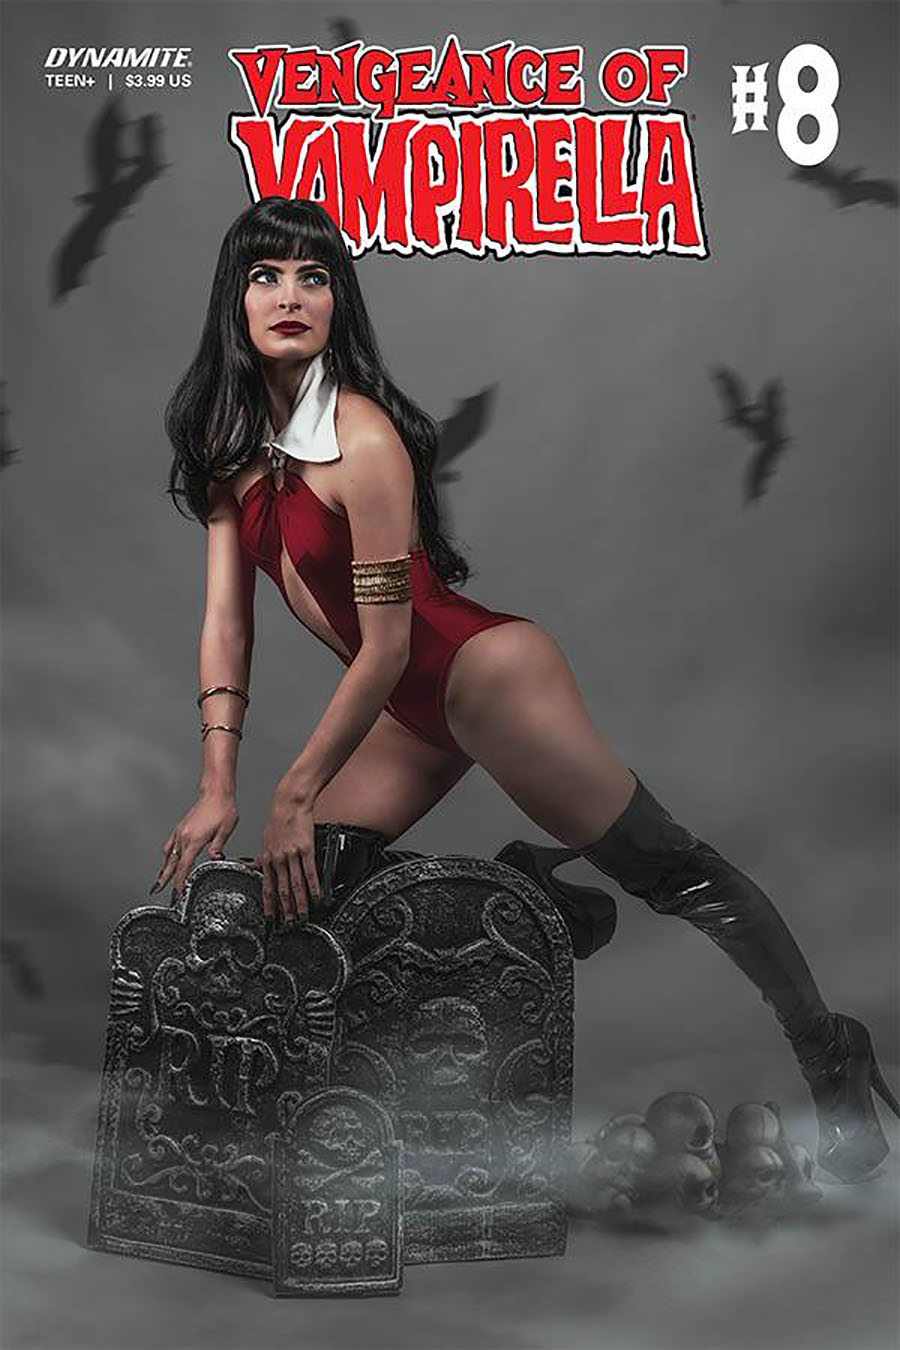 Vengeance Of Vampirella Vol 2 #8 Cover D Variant Teena Titan Cosplay Photo Cover